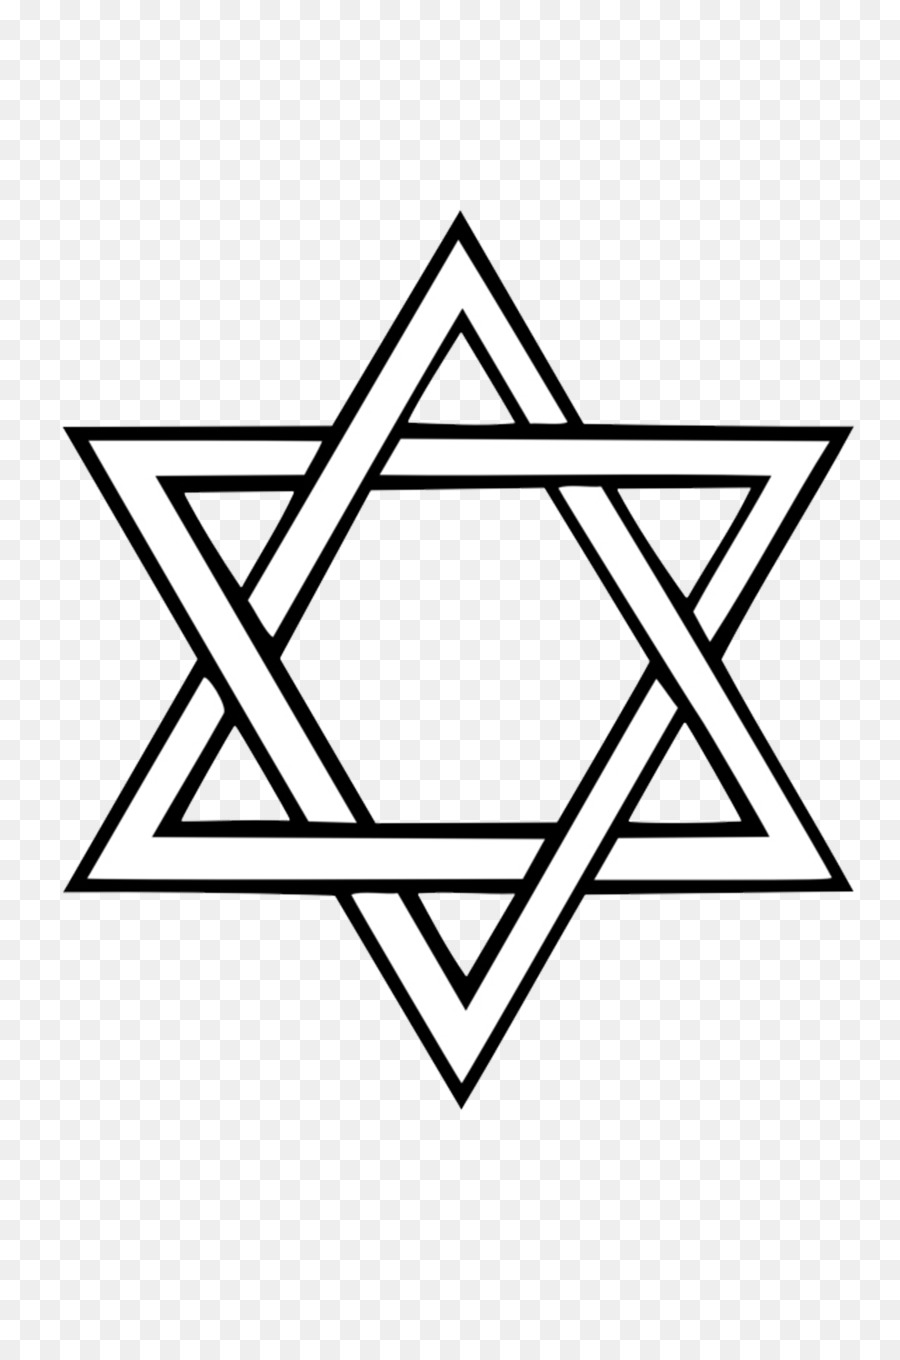 Star of David Judaism Jewish symbolism Flag of Israel - star of david png download - 4134*6191 - Free Transparent Star Of David png Download.